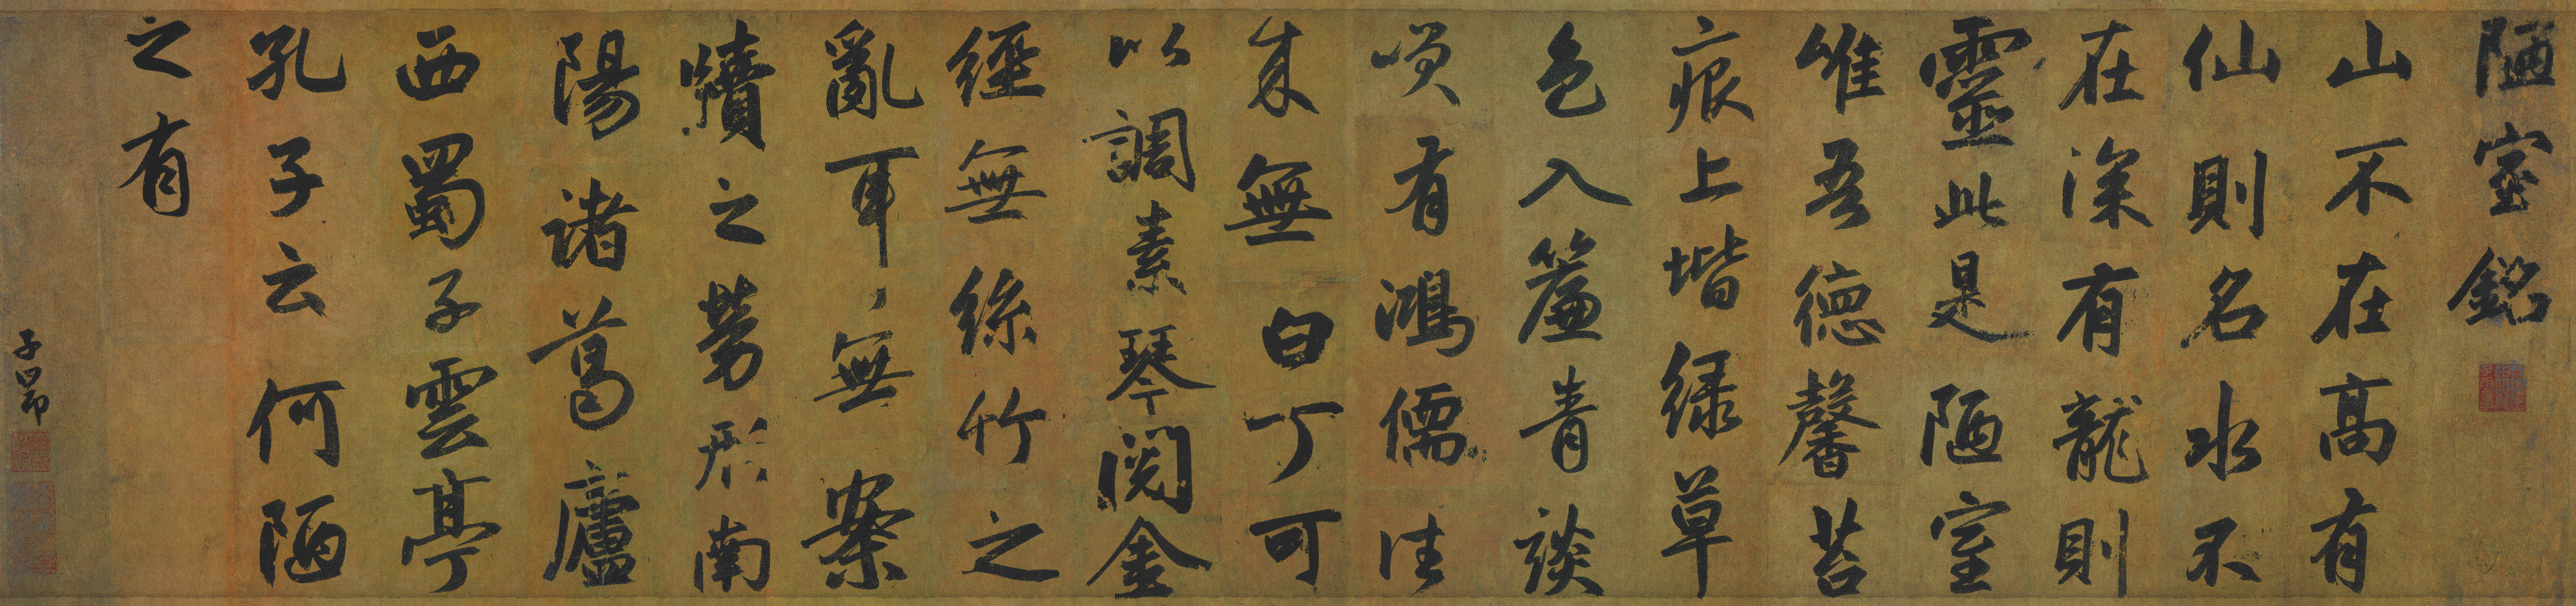 Calligraphy Typography Text 8193x1928